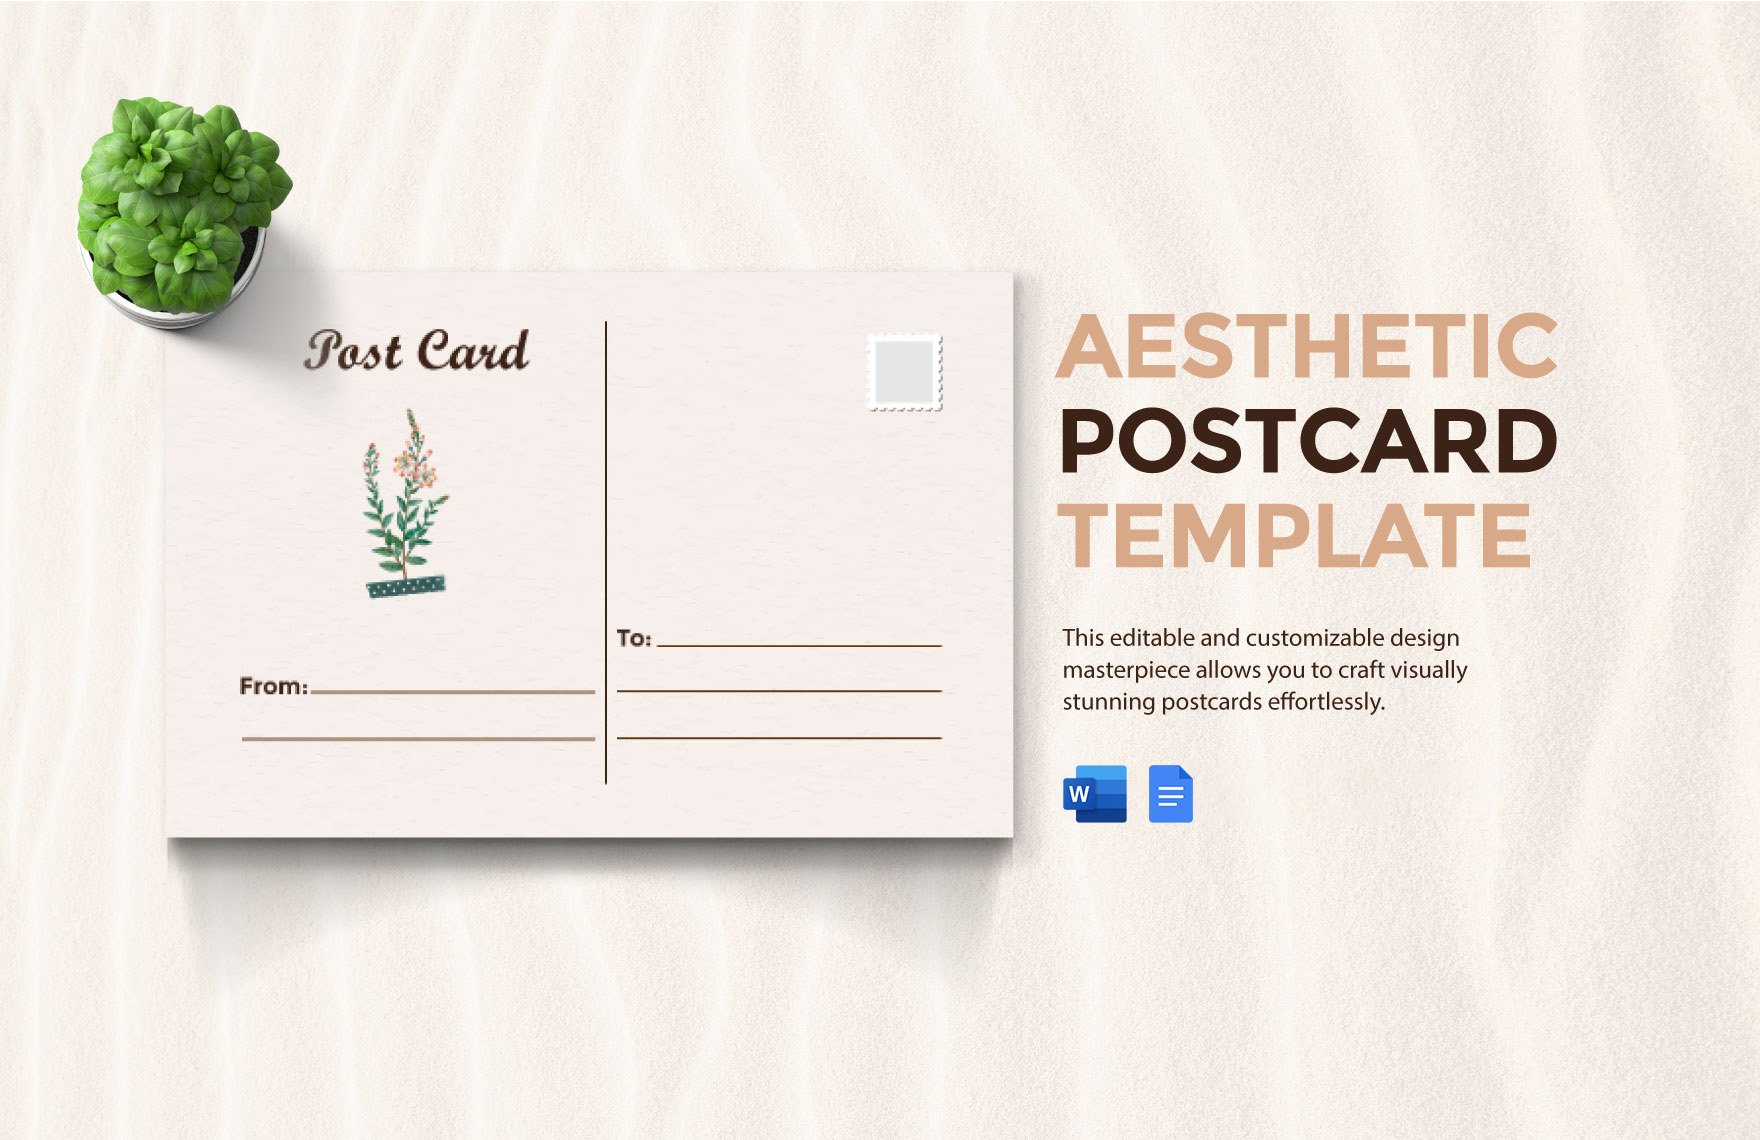 Aesthetic Postcard Template in Word, Google Docs